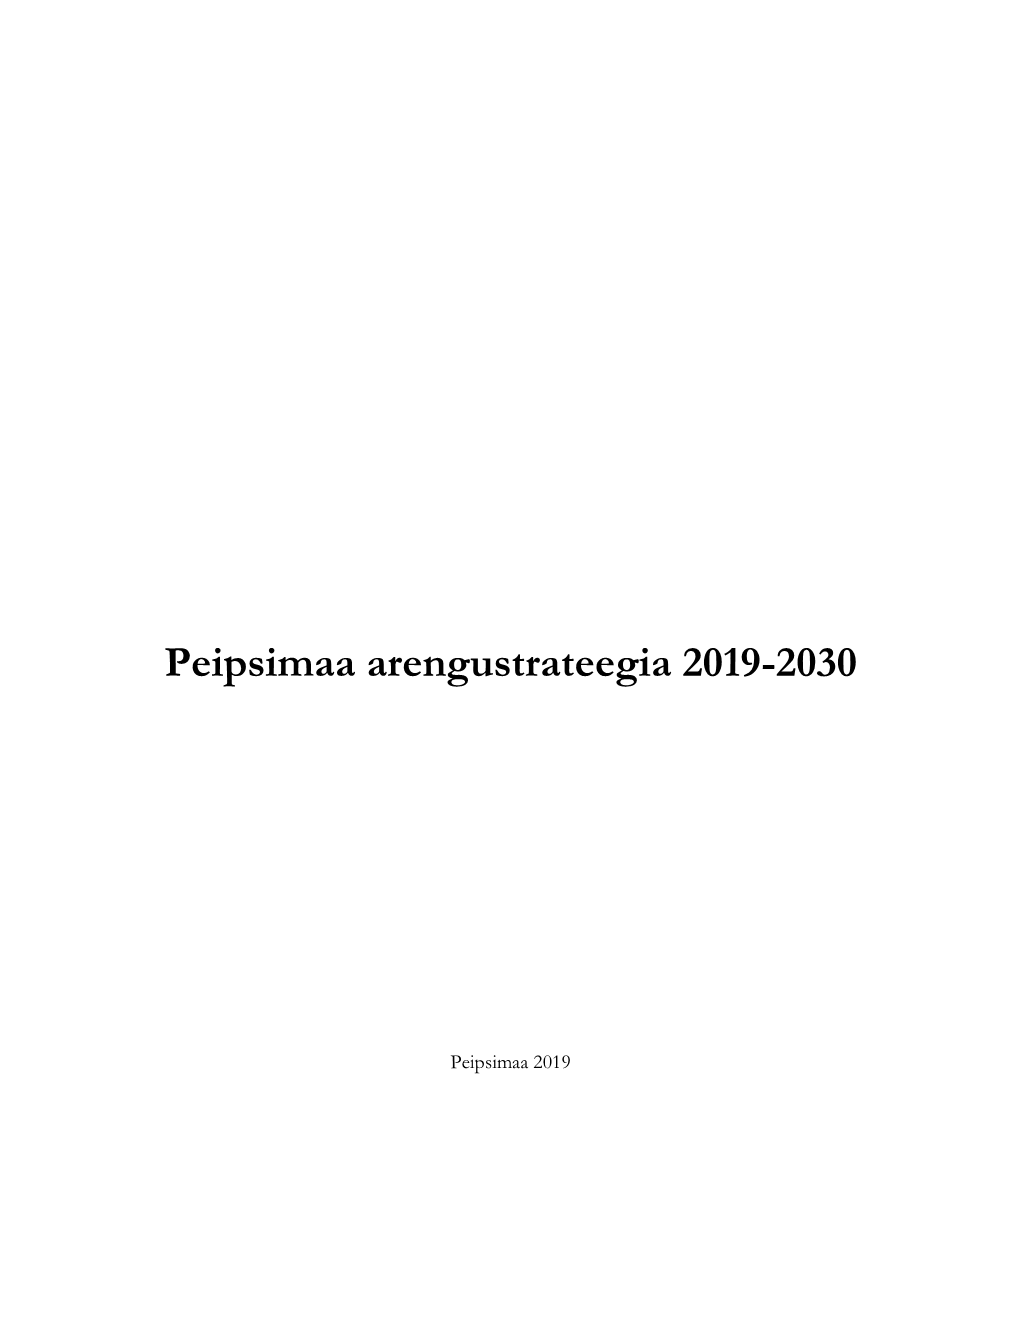 Peipsimaa Arengustrateegia 2019-2030